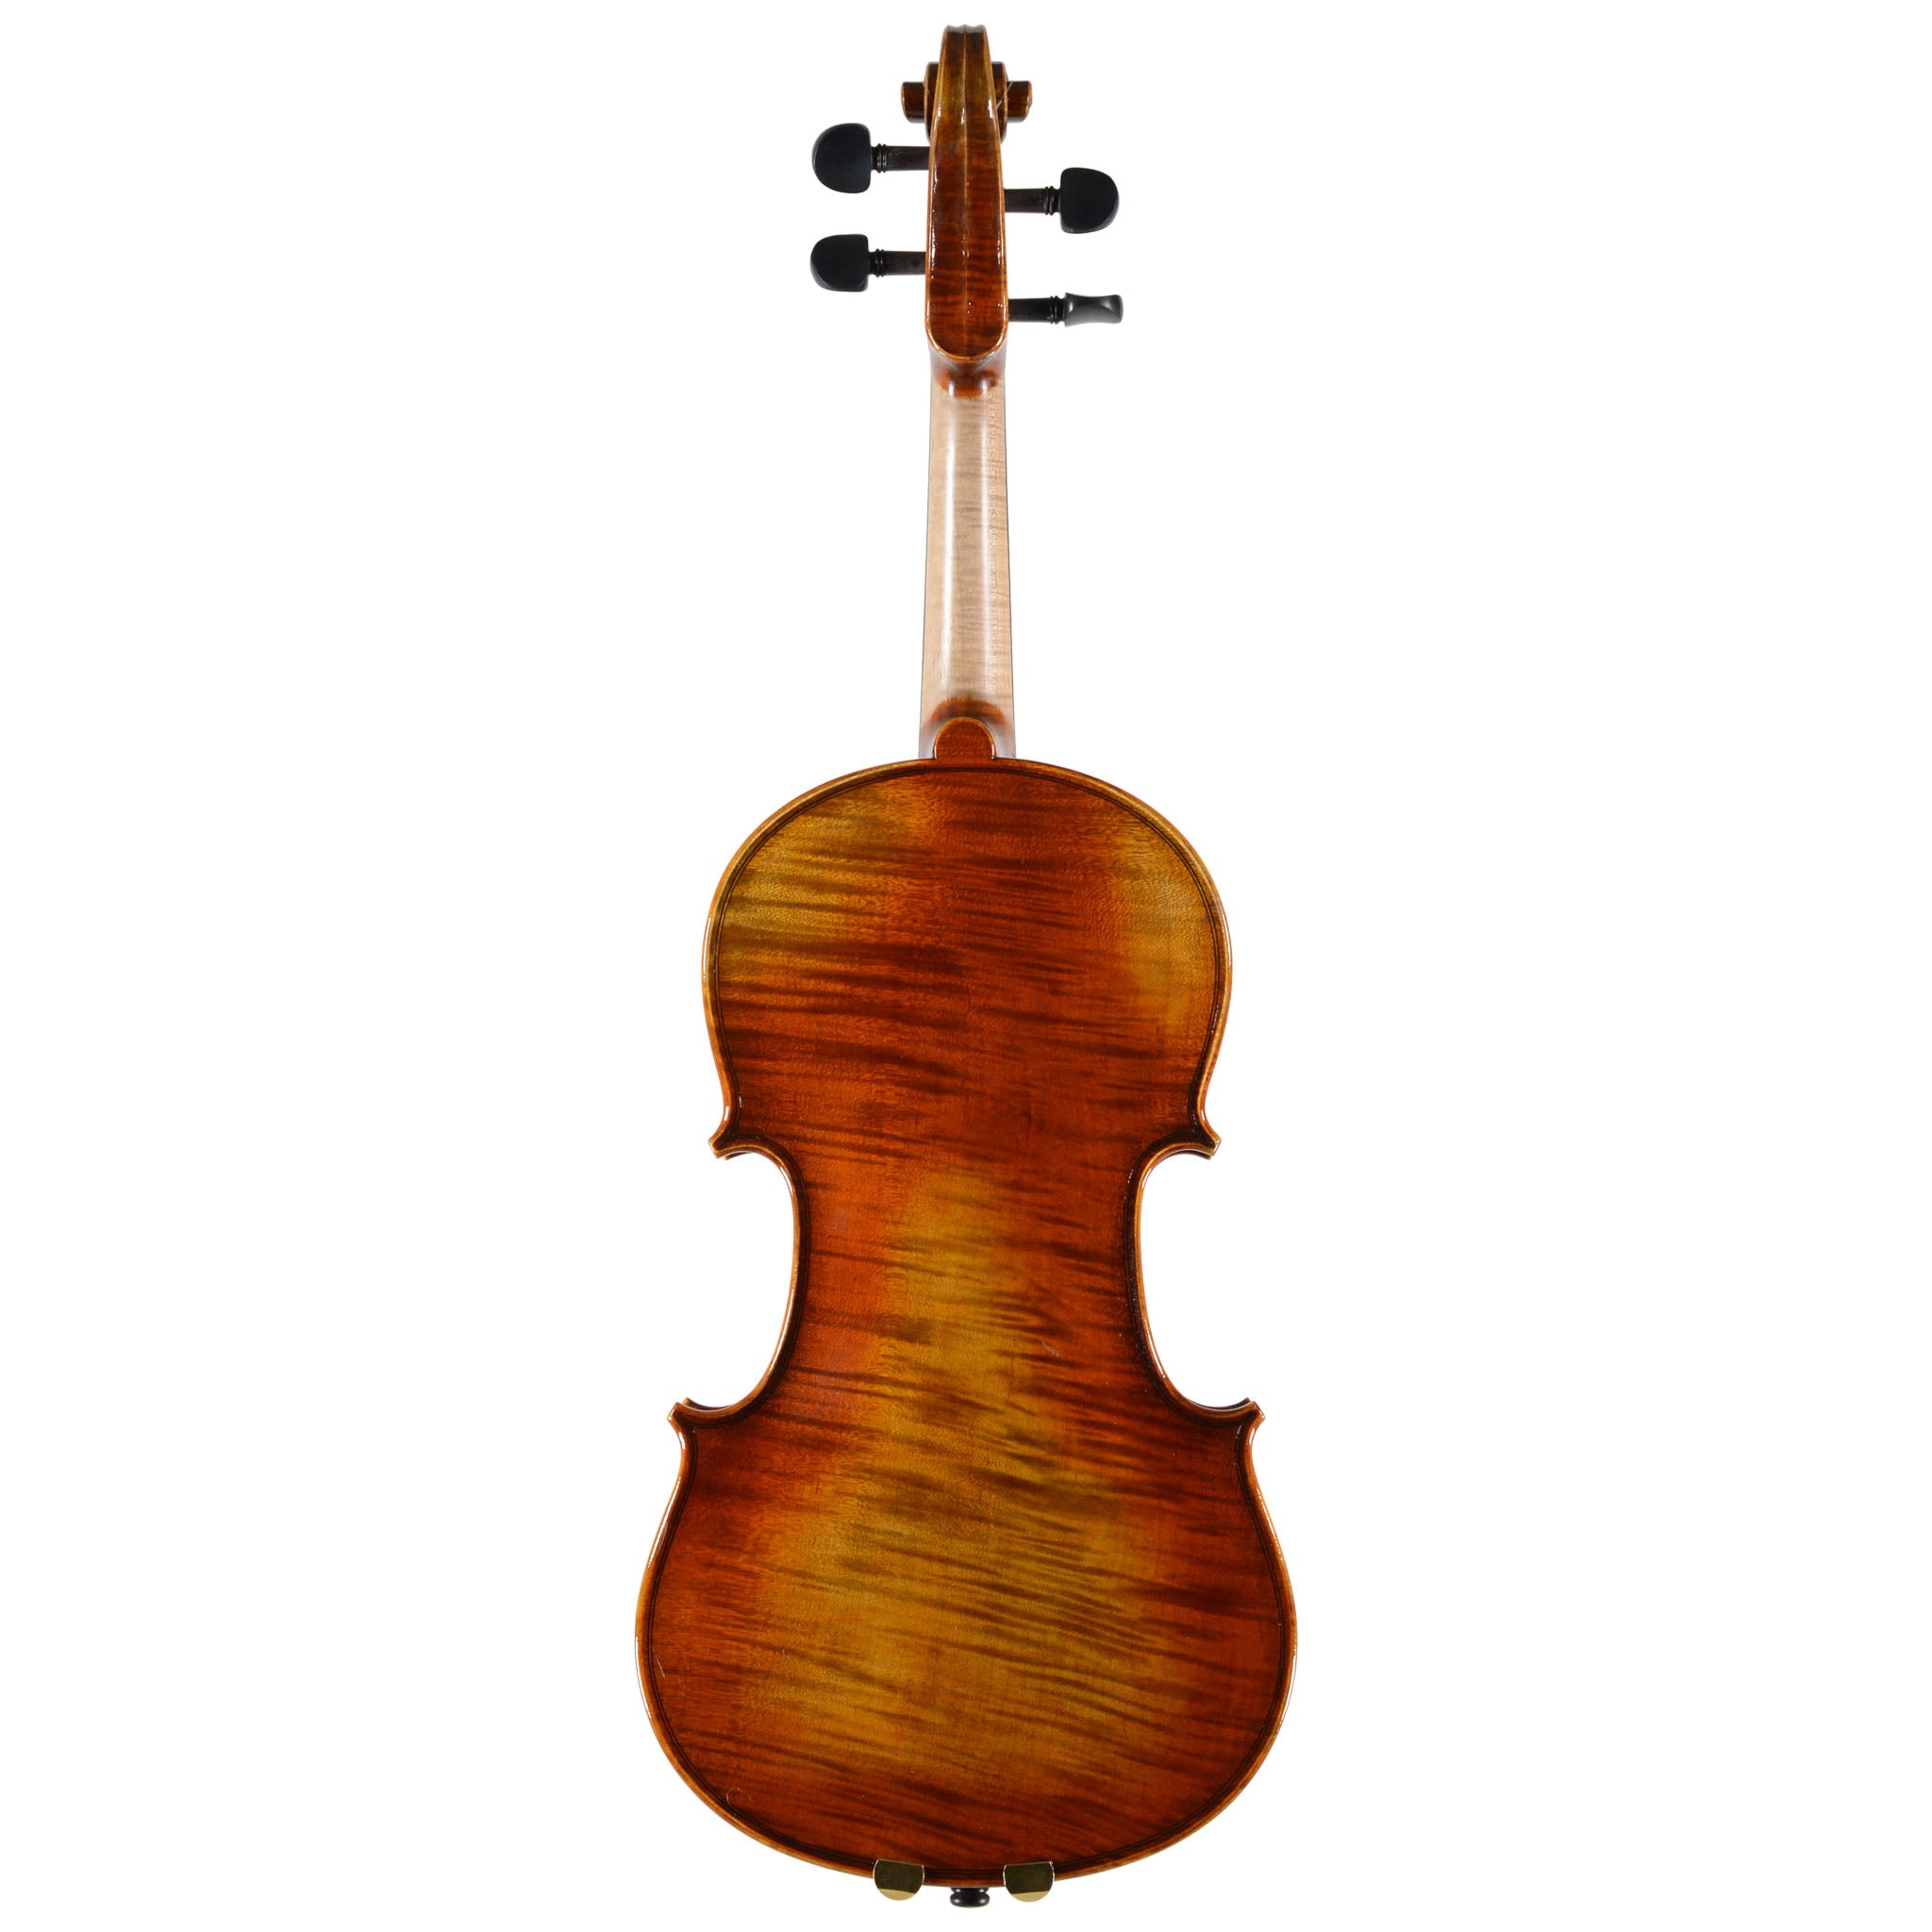 B-stock Fiddlershop Full Size Violin (FS436)